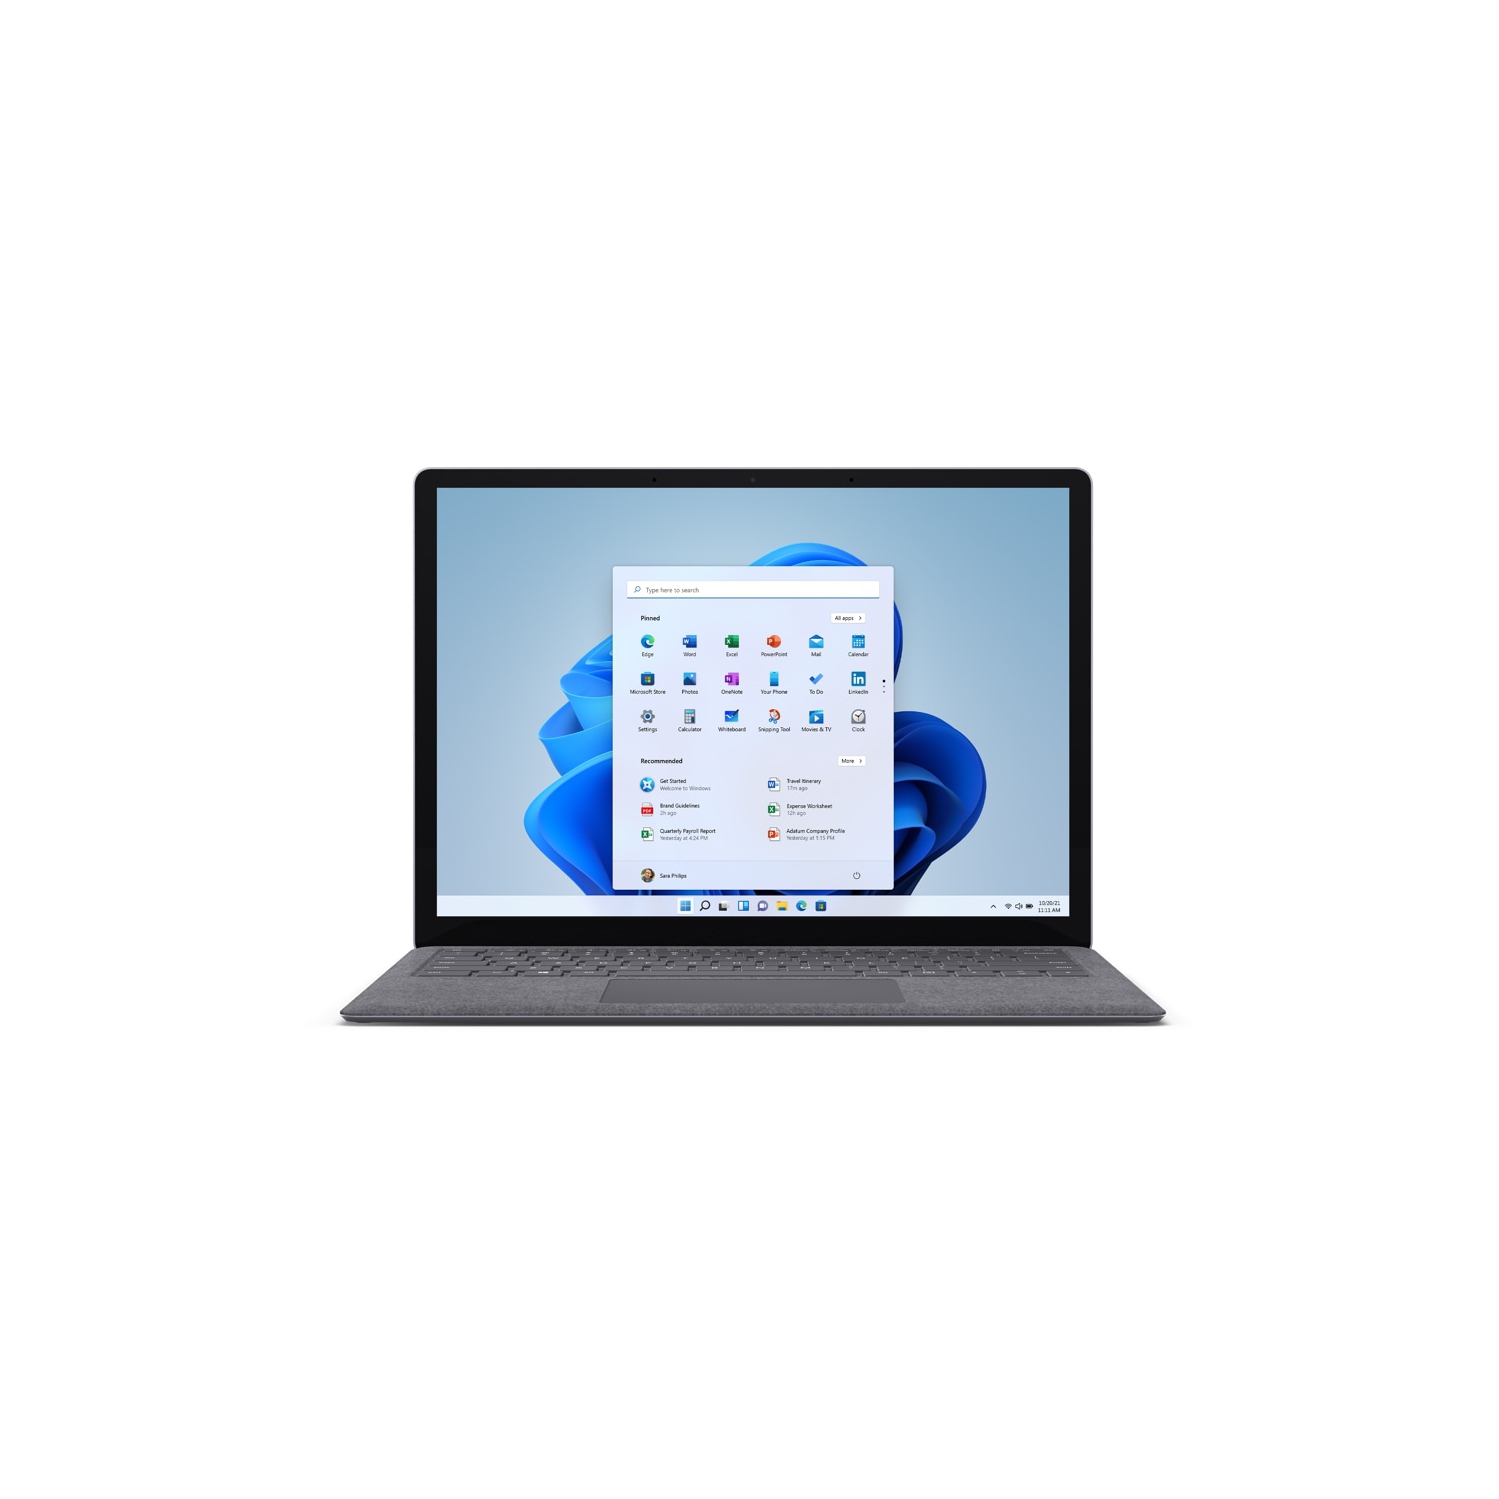 Refurbished (Excellent) Microsoft Surface Laptop 4 - Intel Core i5-1135G7/16GB LPDDR4x/512GB SSD/Windows 11 Home/ 13.5" Screen - Platinum